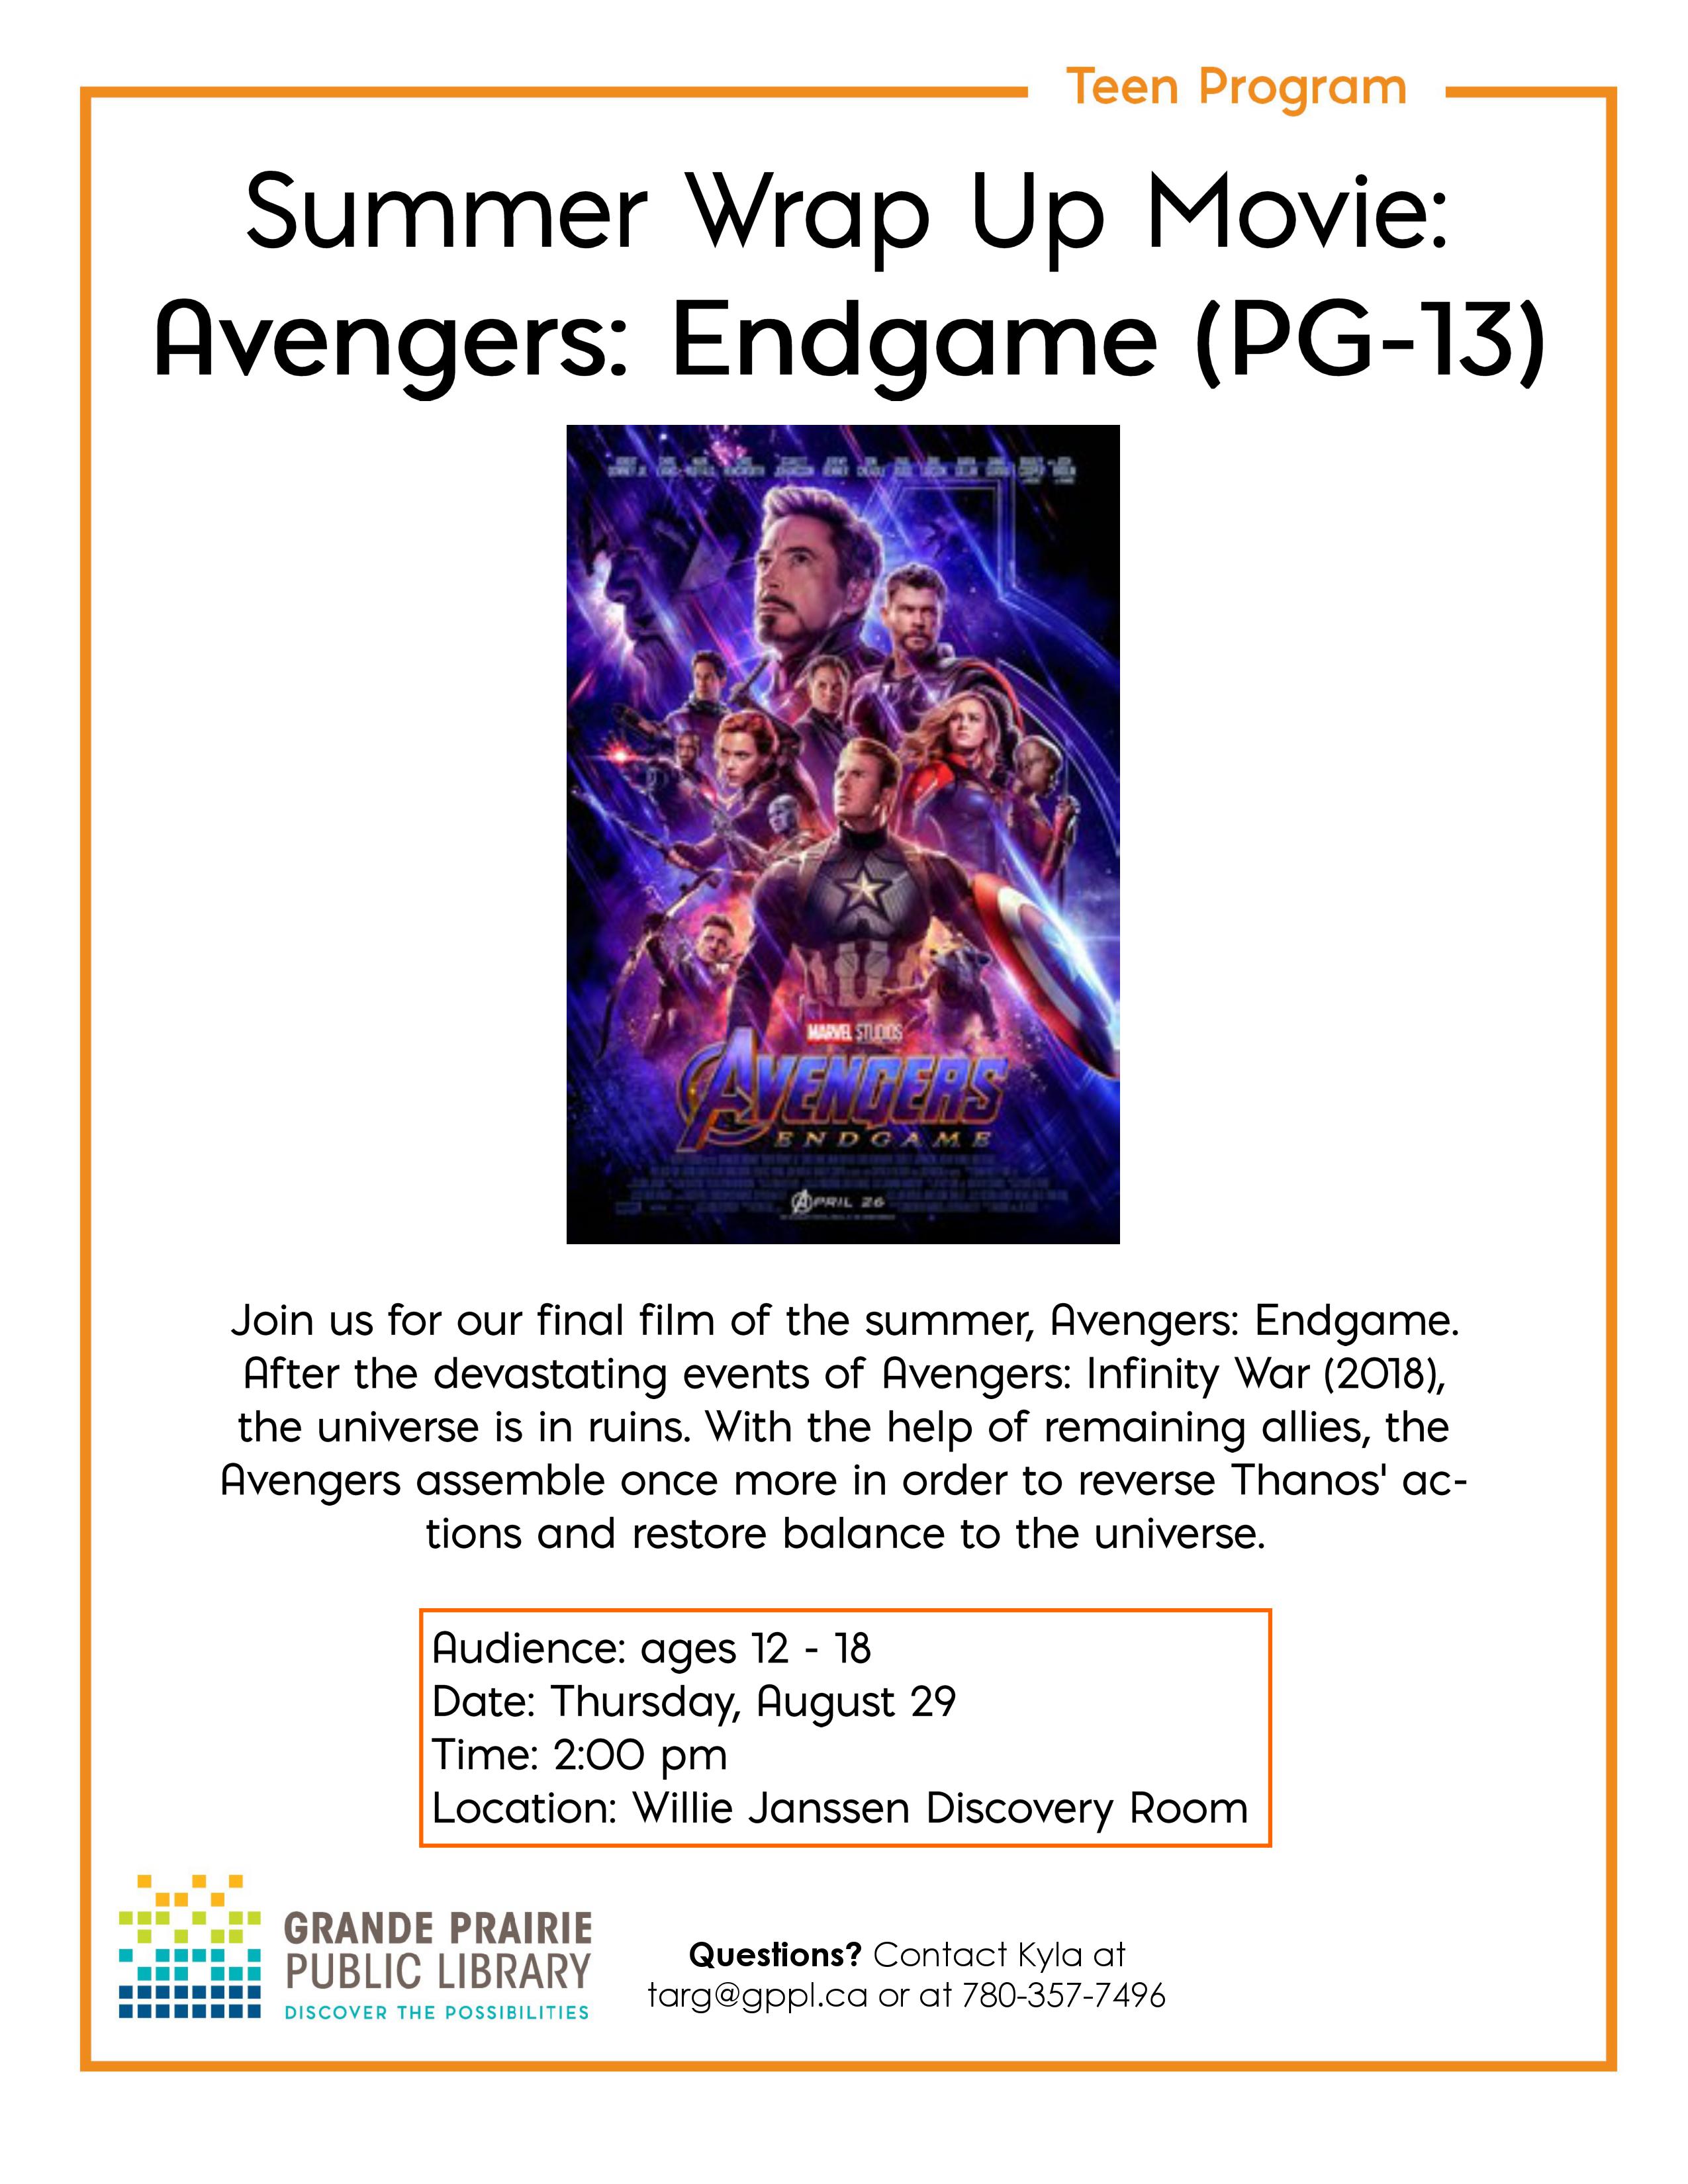 Endgame event poster